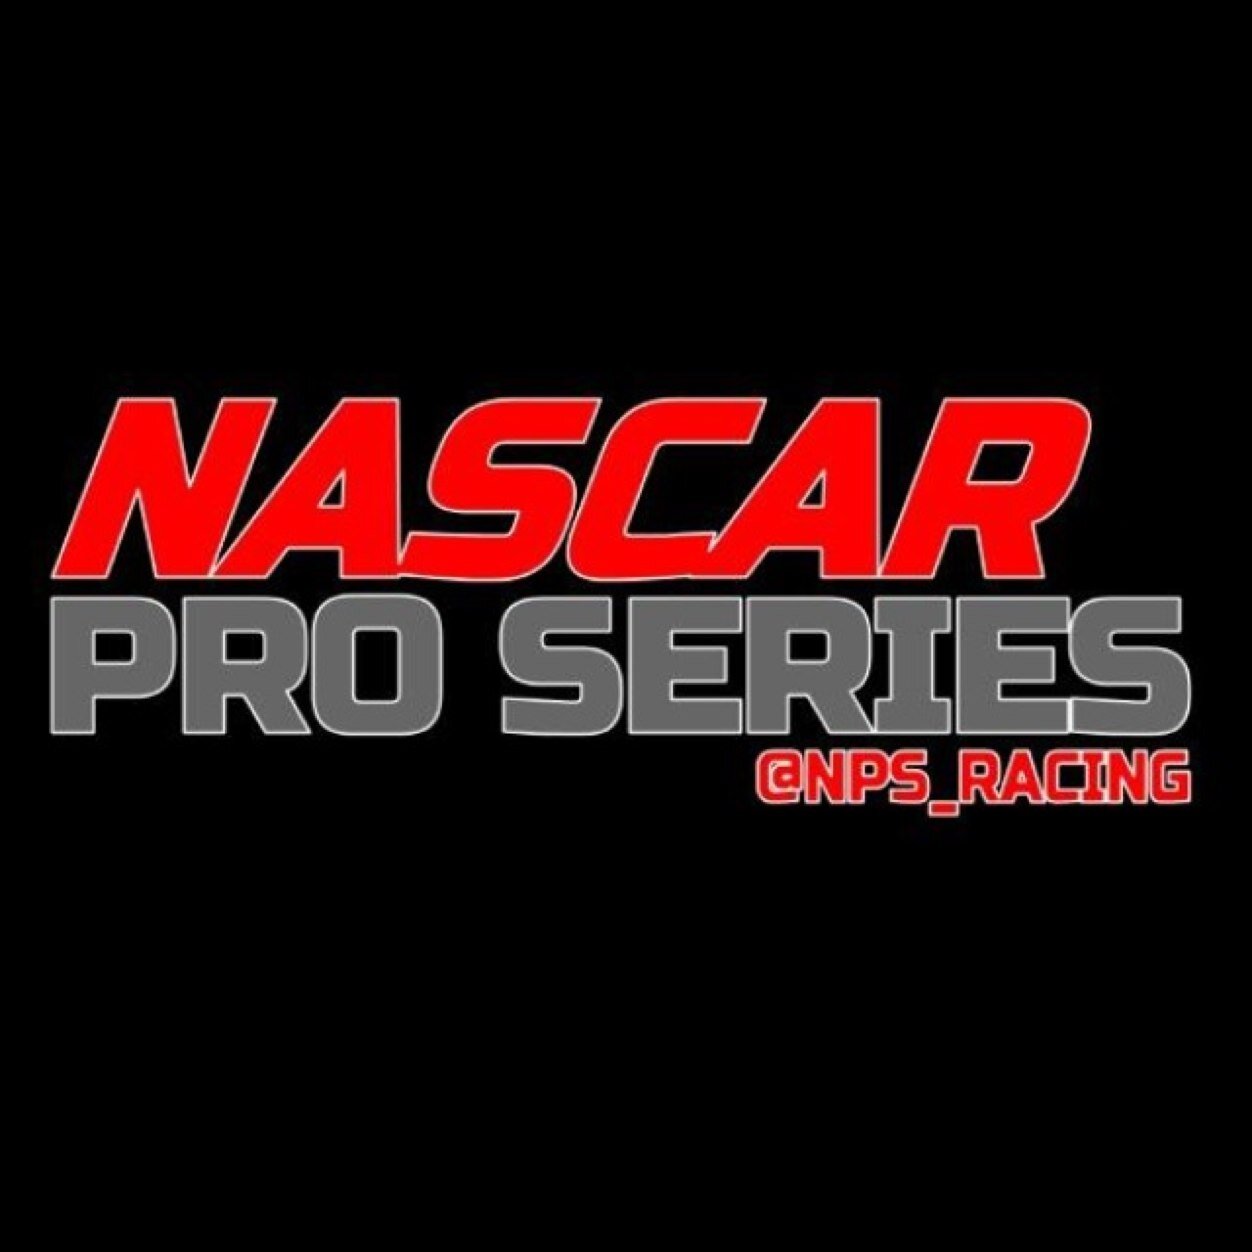 NASCAR Pro Series